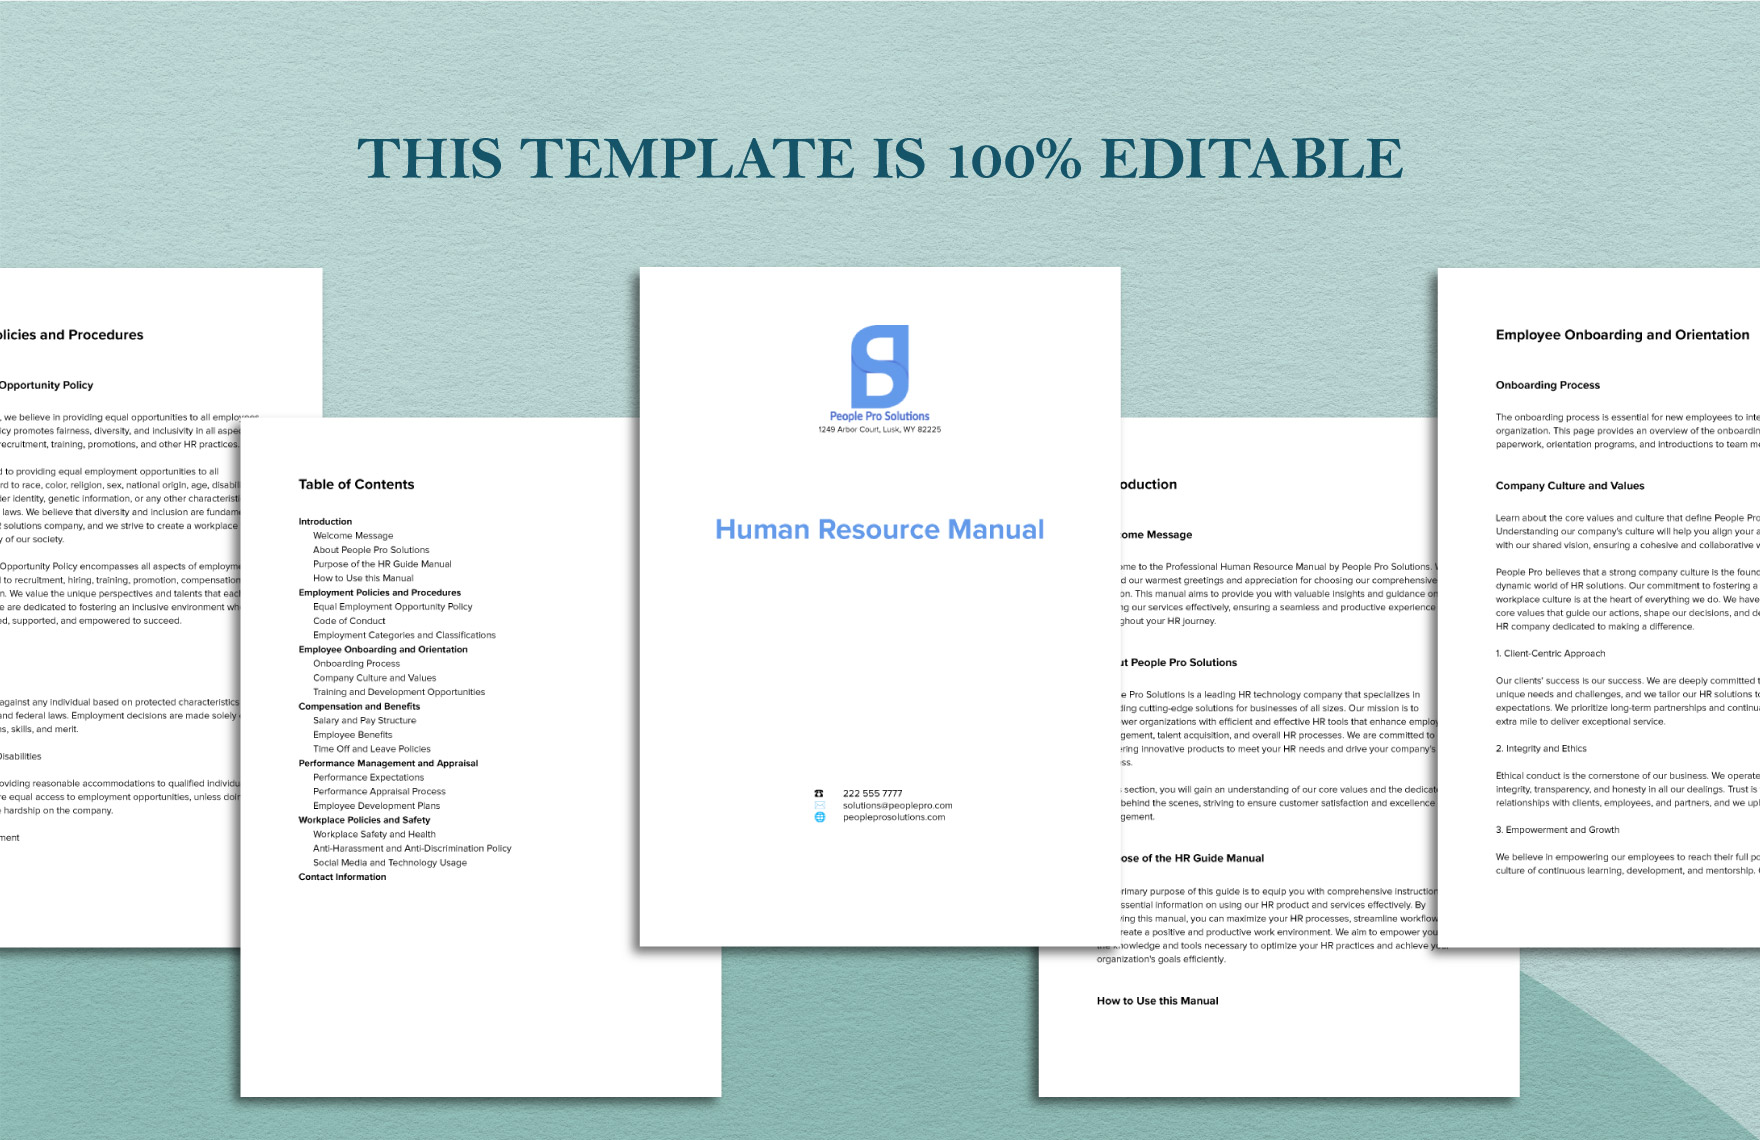 Professional Human Resource Manual Template